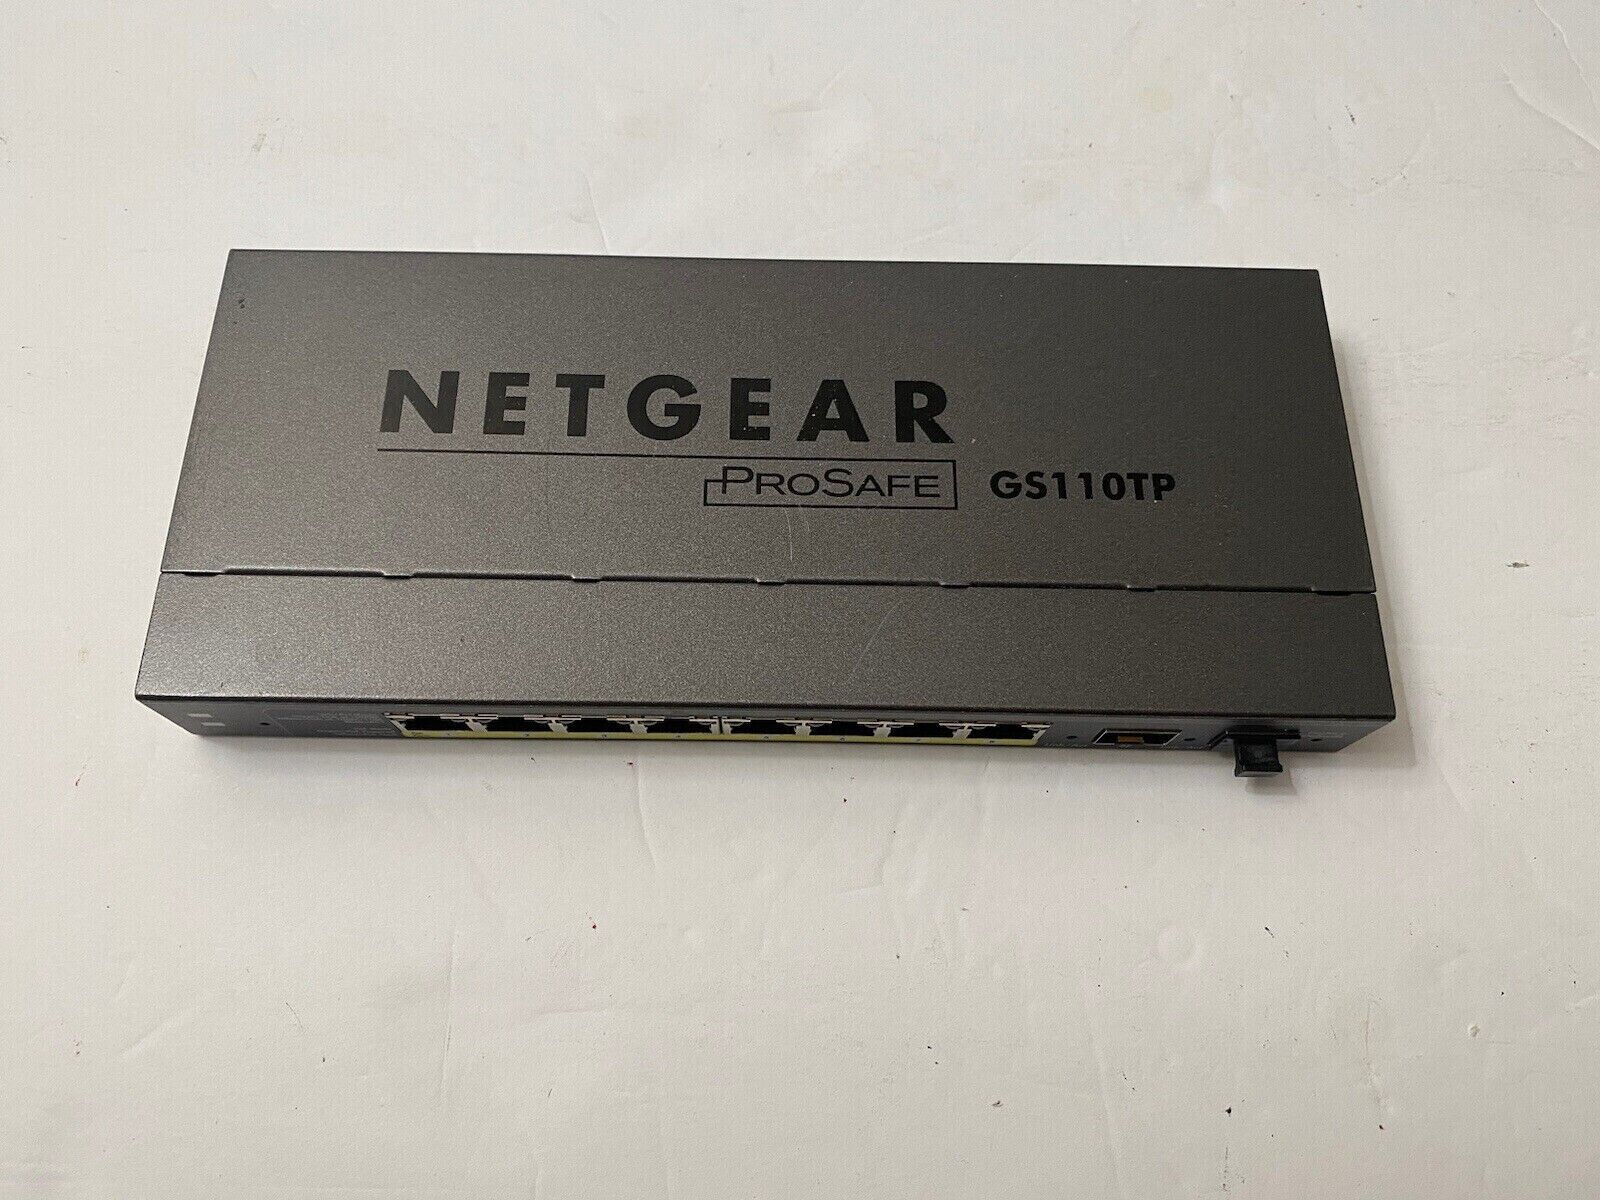 Netgear GS110TP Prosafe 8-Port PoE Gigabit Smart Switch